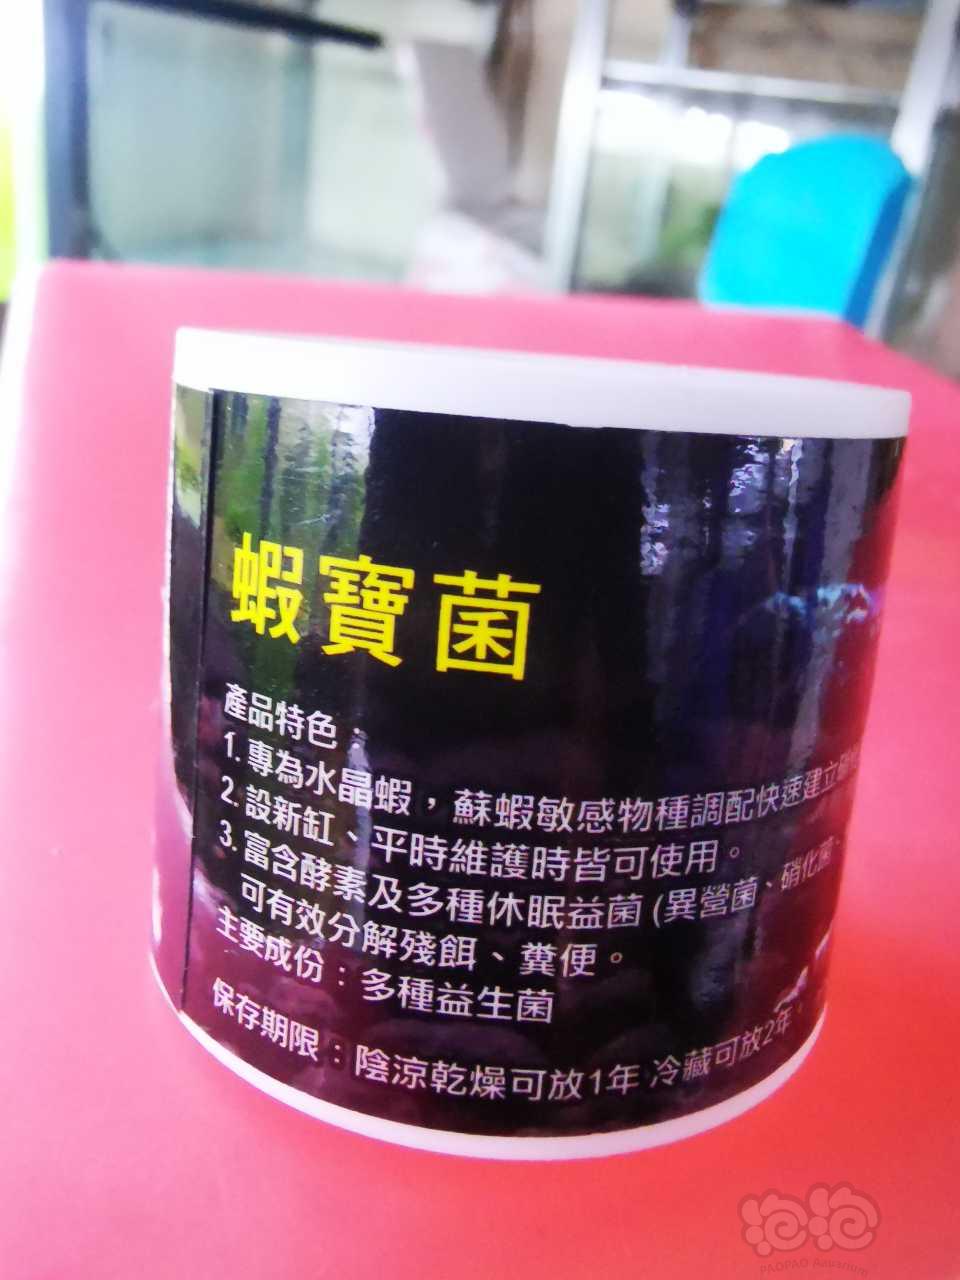 2021-1-23#RMB拍卖台湾森林叔叔虾宝菌一盒15克-图1